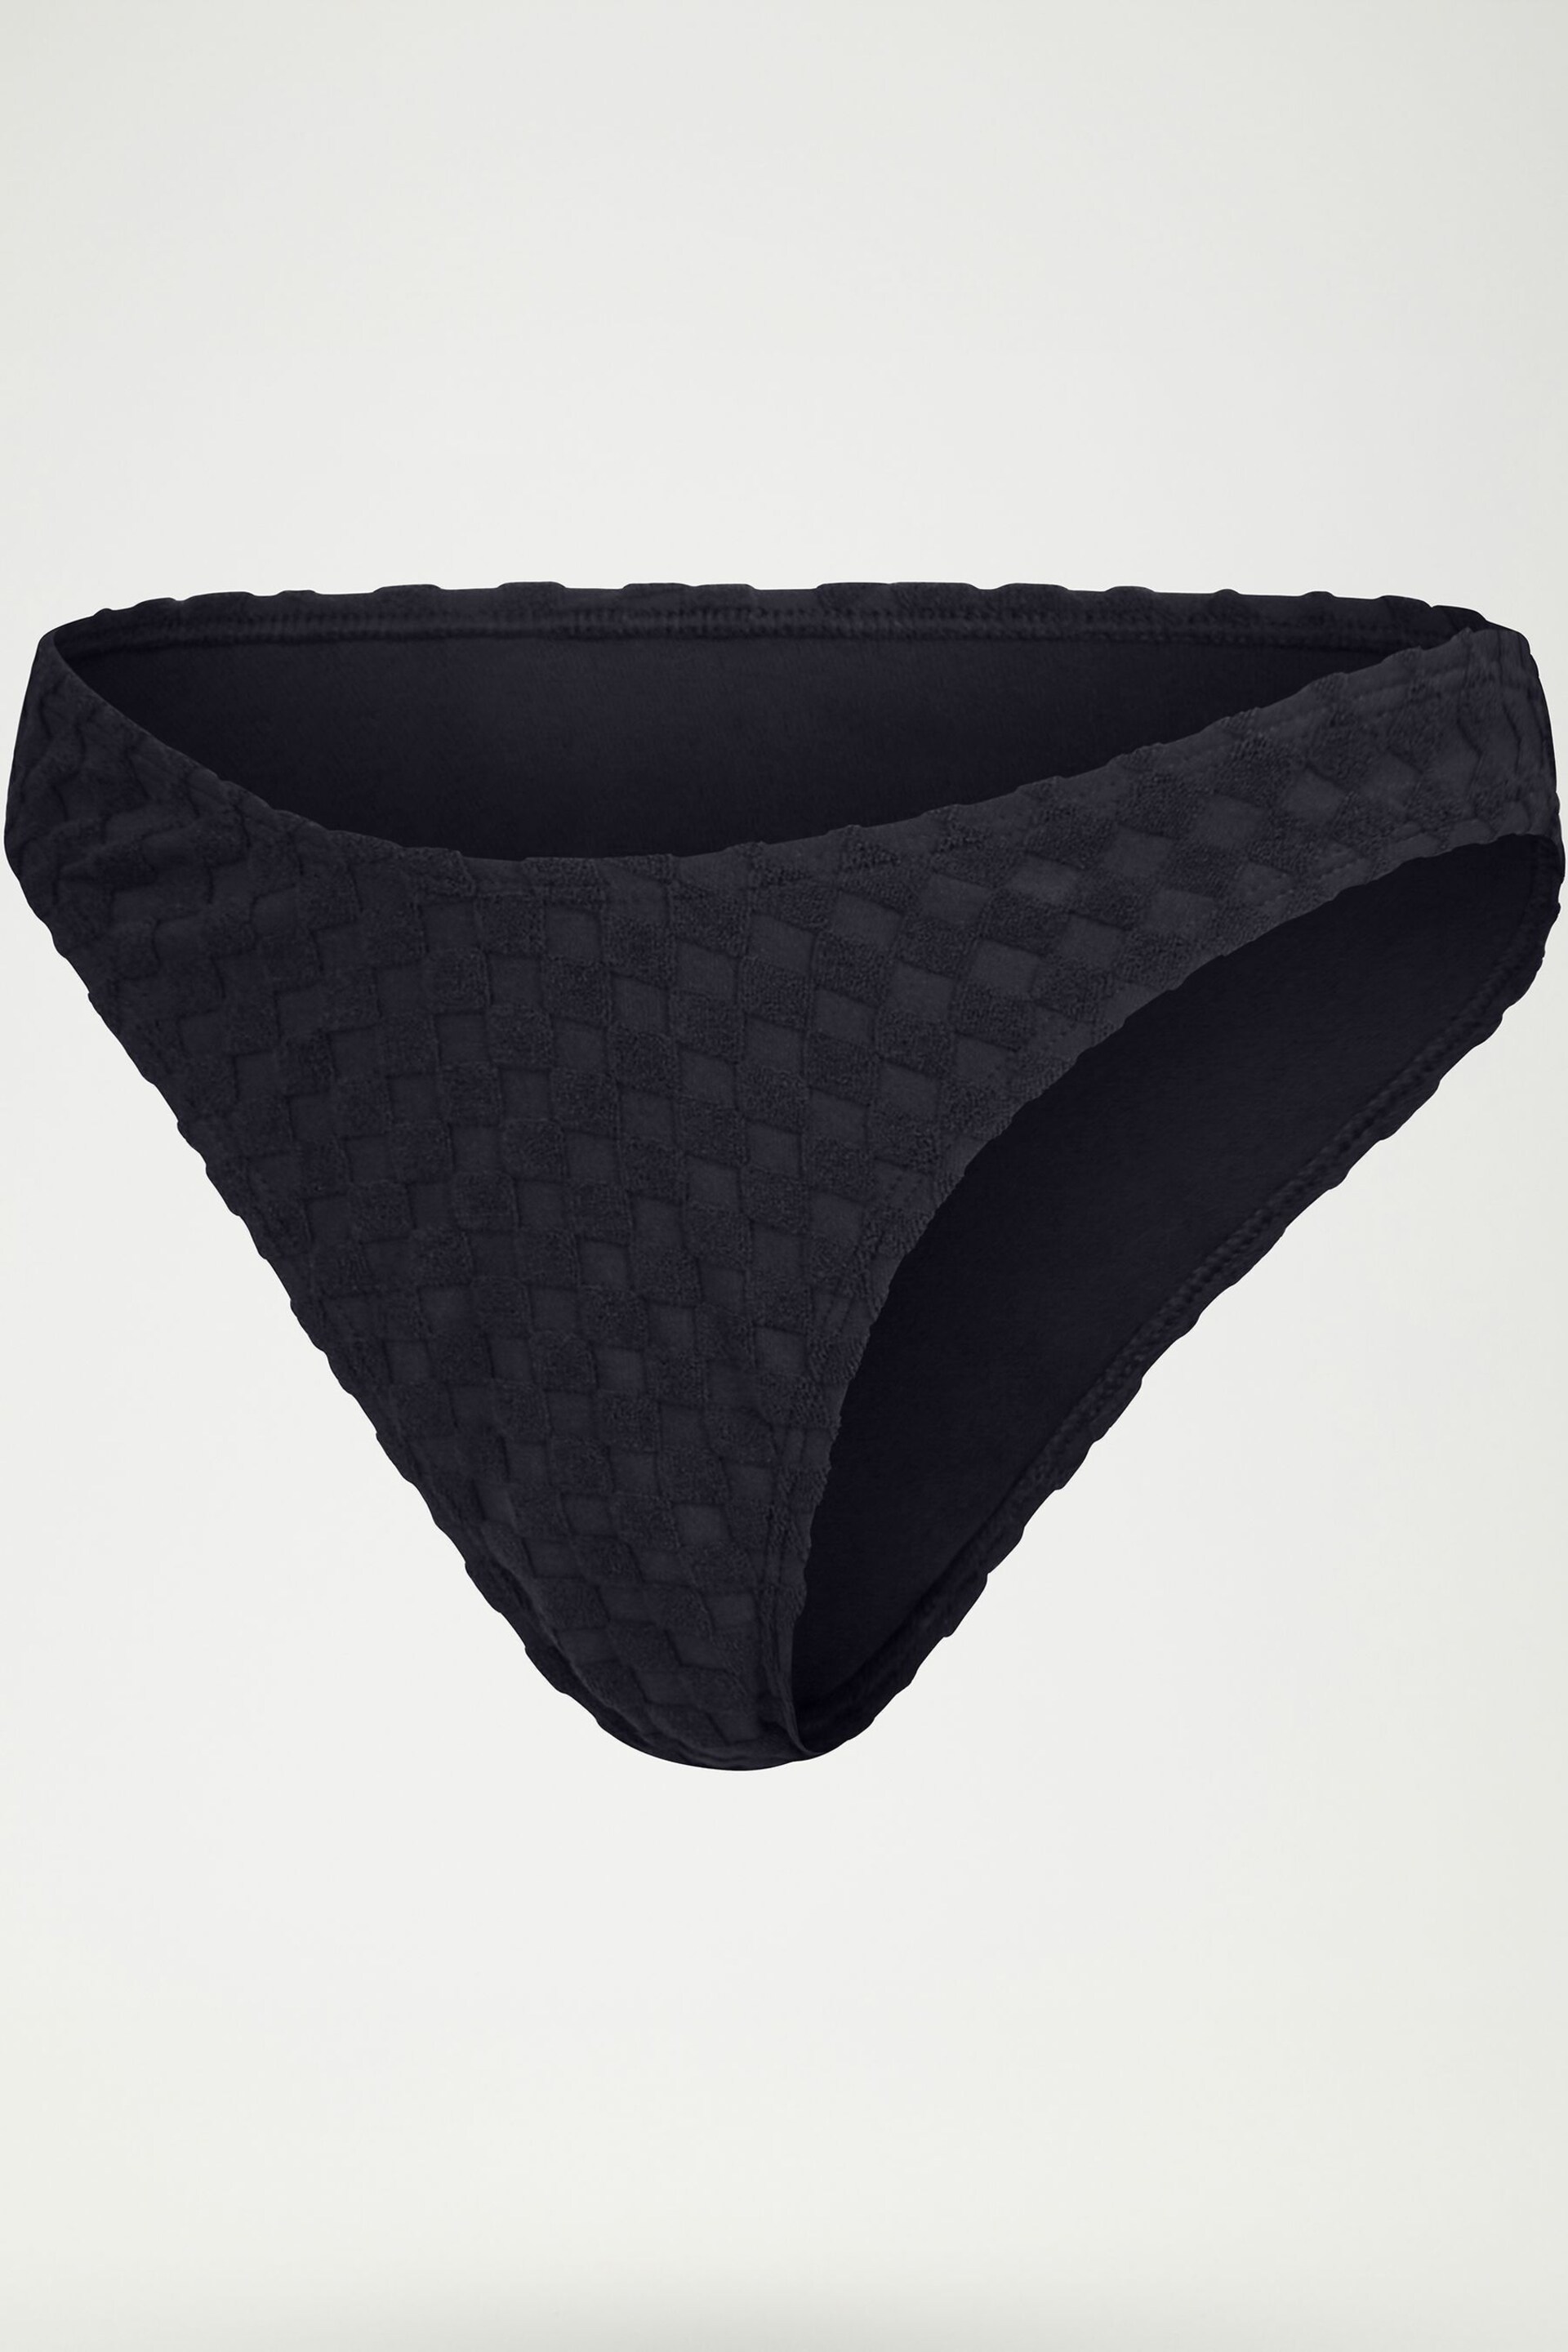 Speedo Terry Scoop Bikini Briefs with UPF50+ Sun Protection - Image 6 of 6